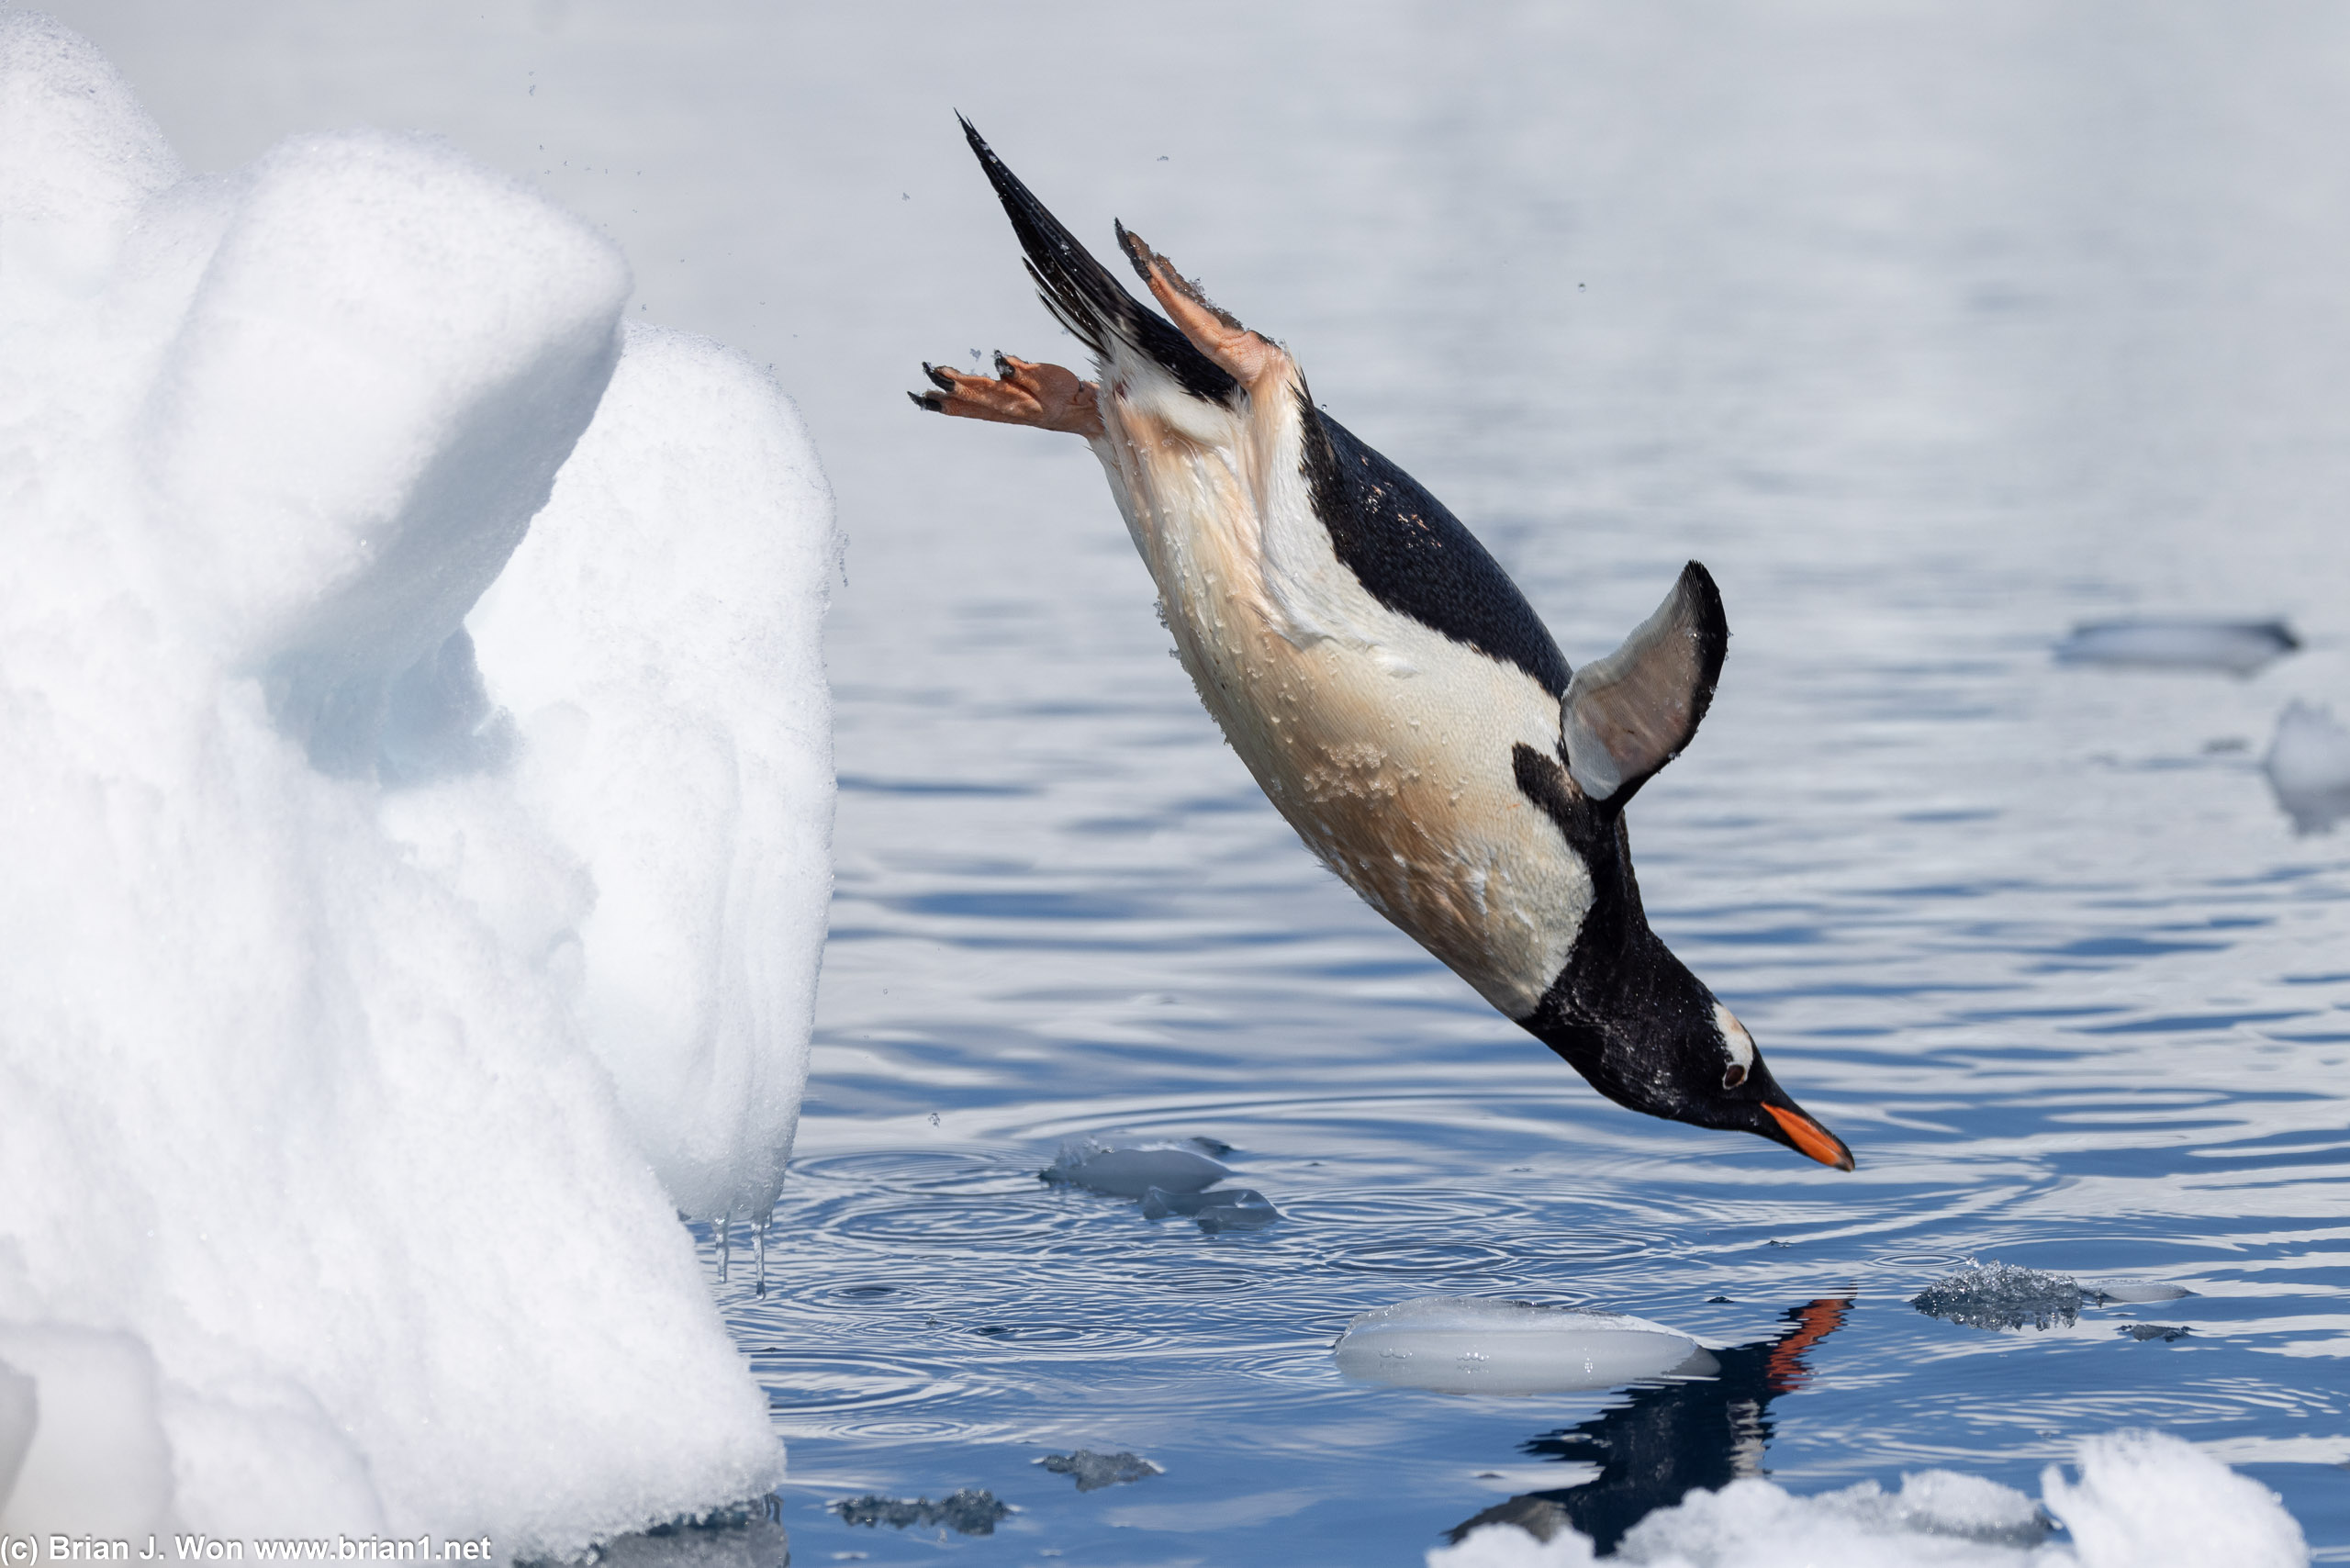 Gentoo penguin gracefully mid-dive.